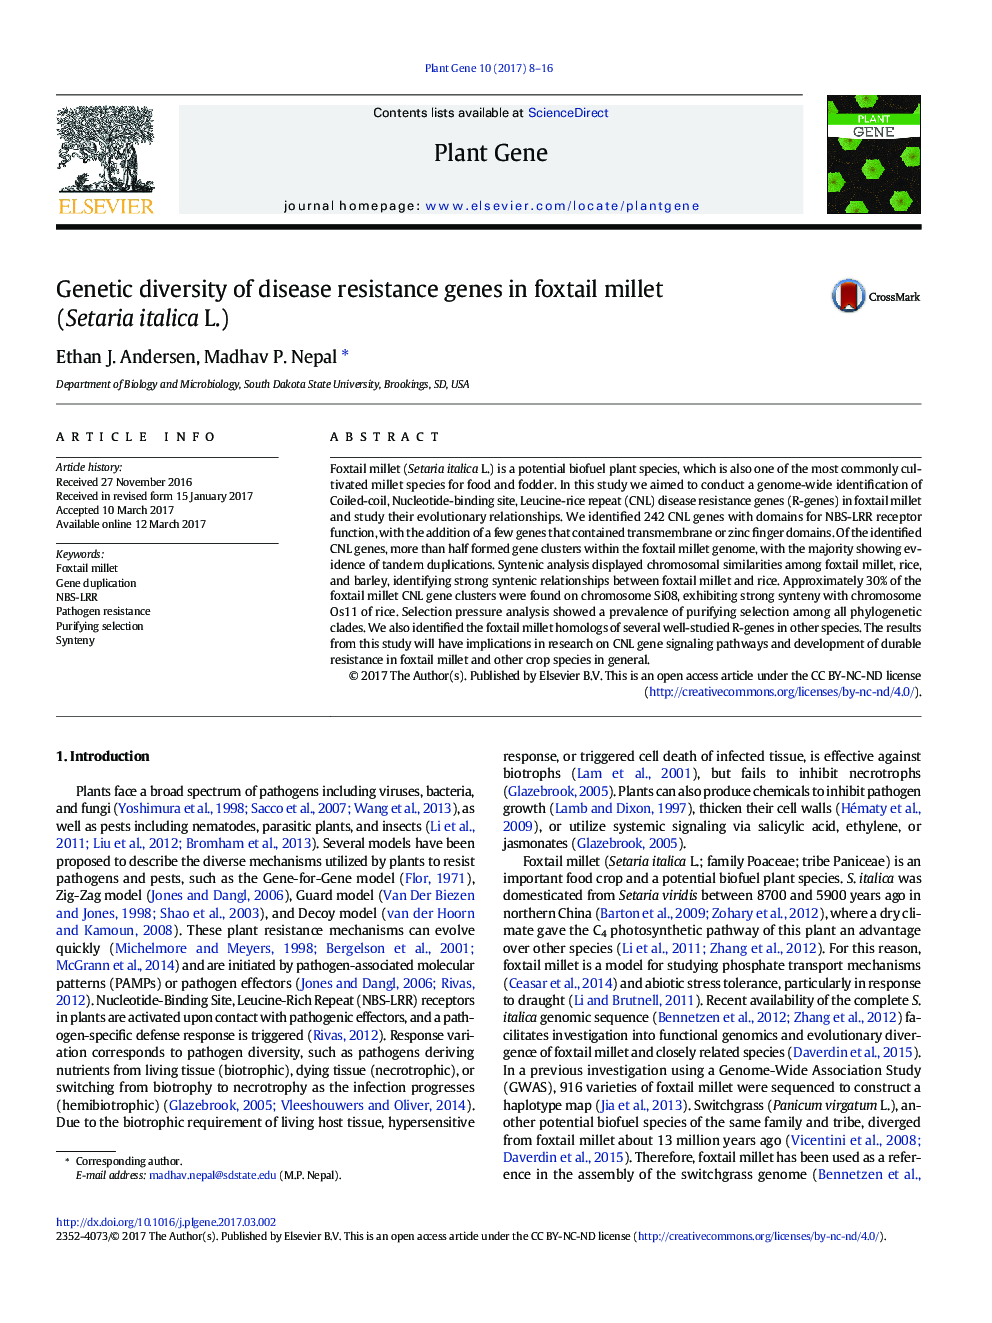 Genetic diversity of disease resistance genes in foxtail millet (Setaria italica L.)